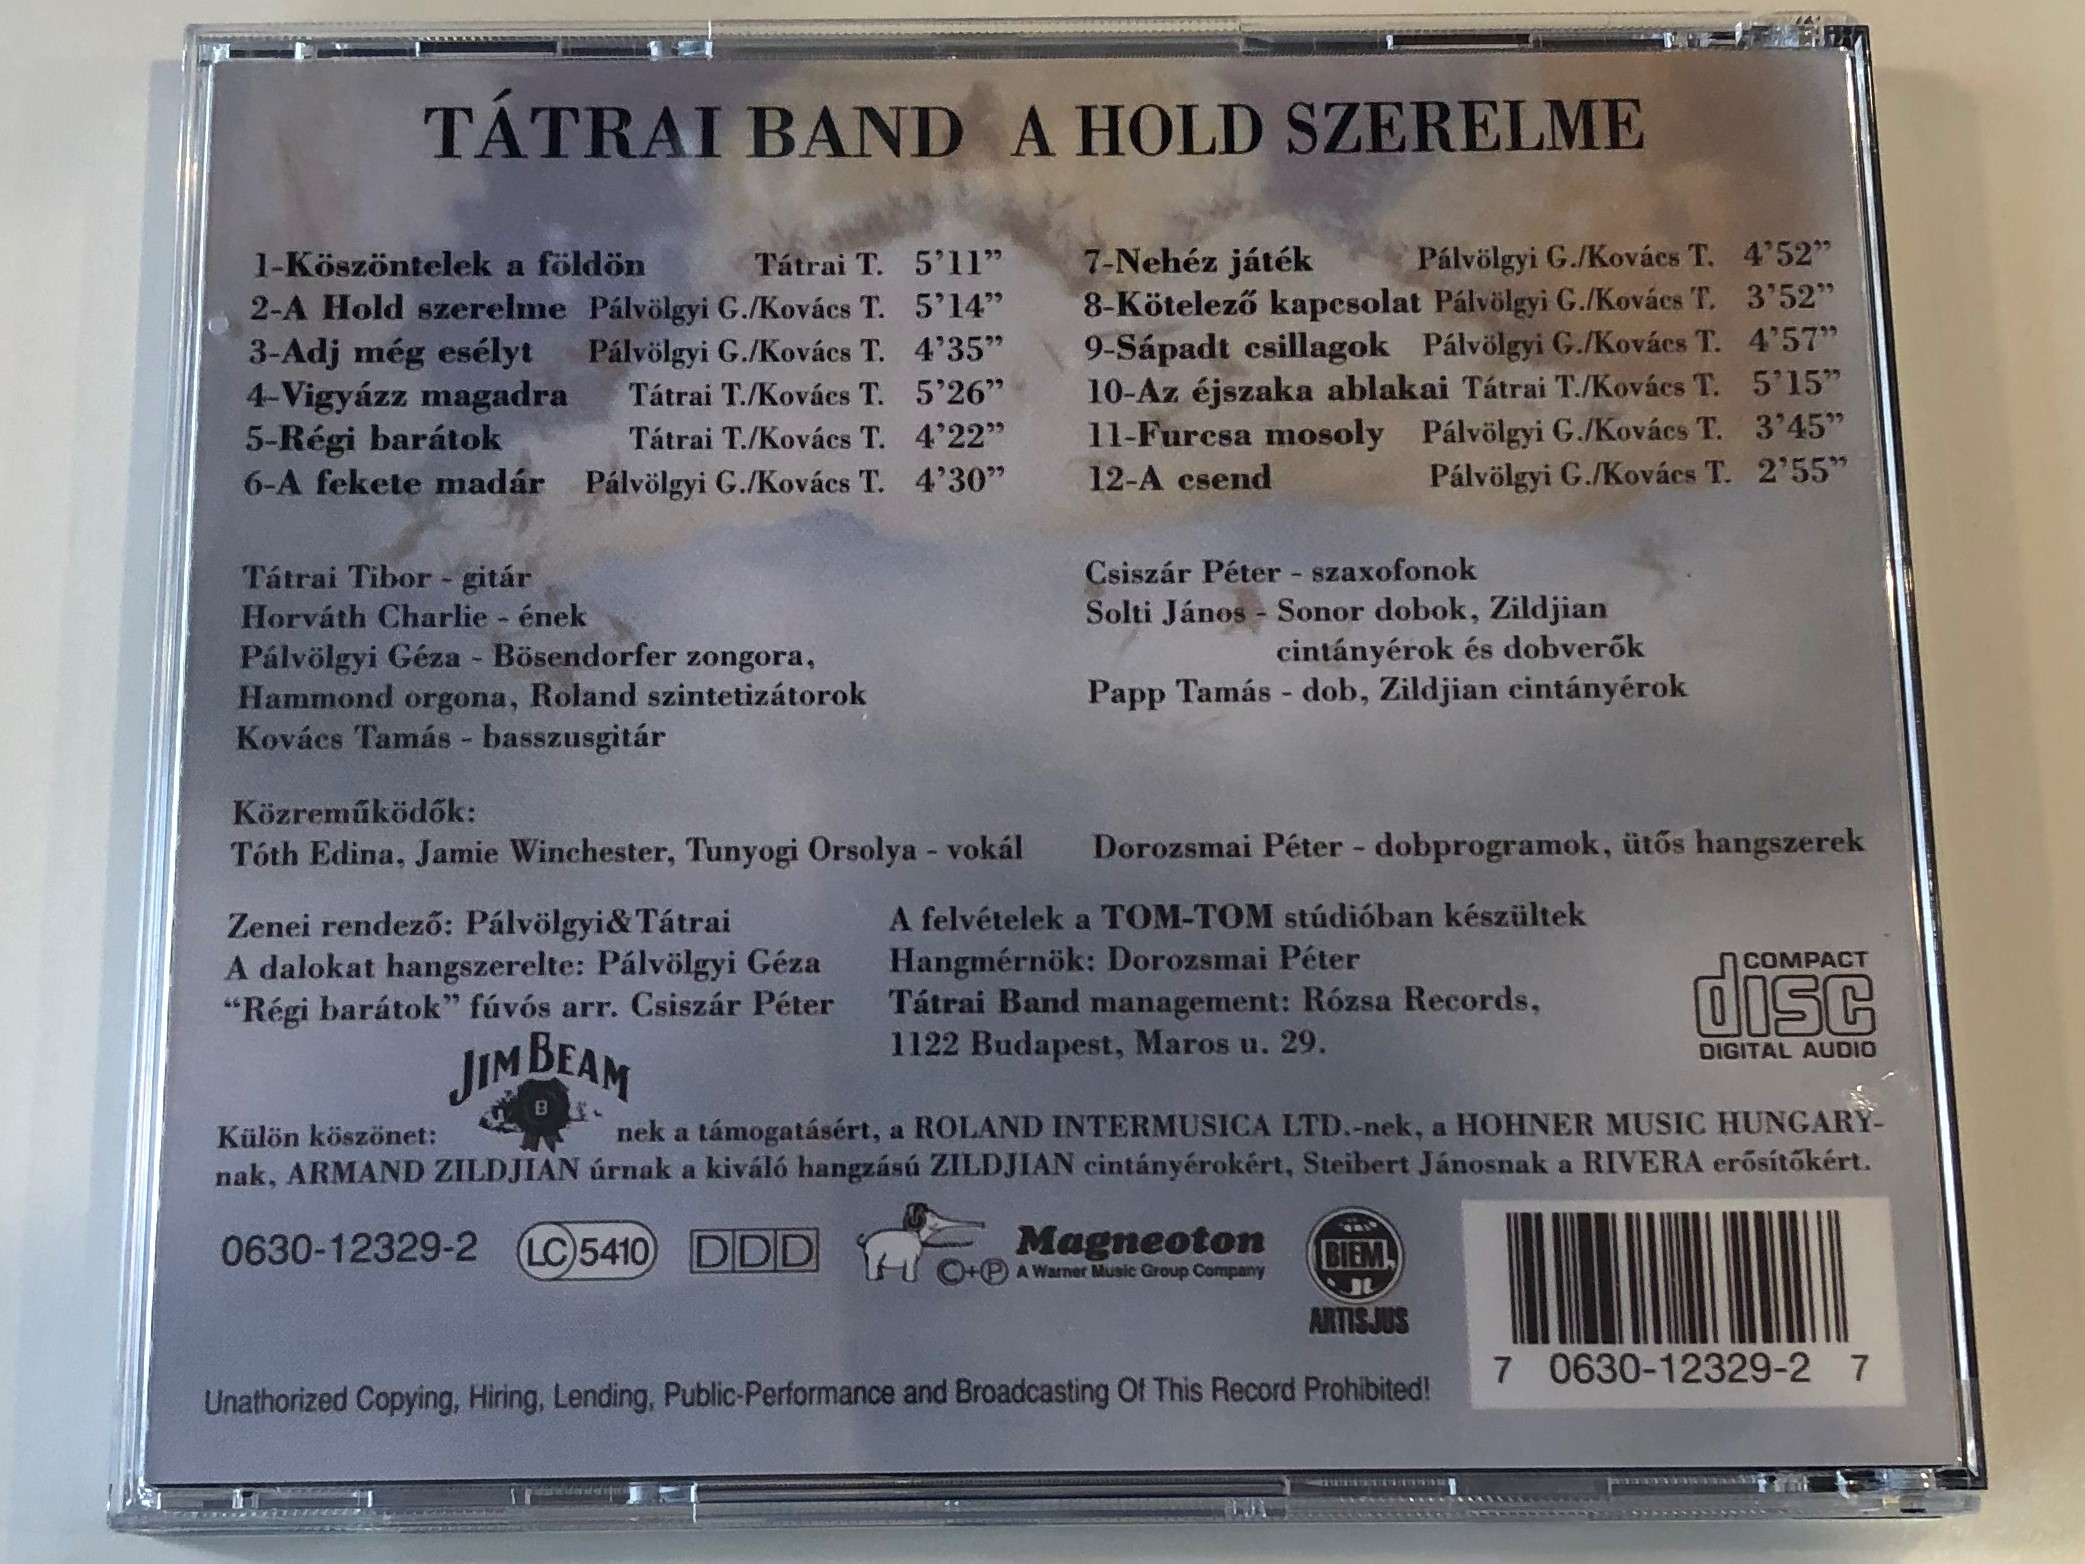 t-trai-band-a-hold-szerelme-magneoton-audio-cd-0630-12329-2-3-.jpg